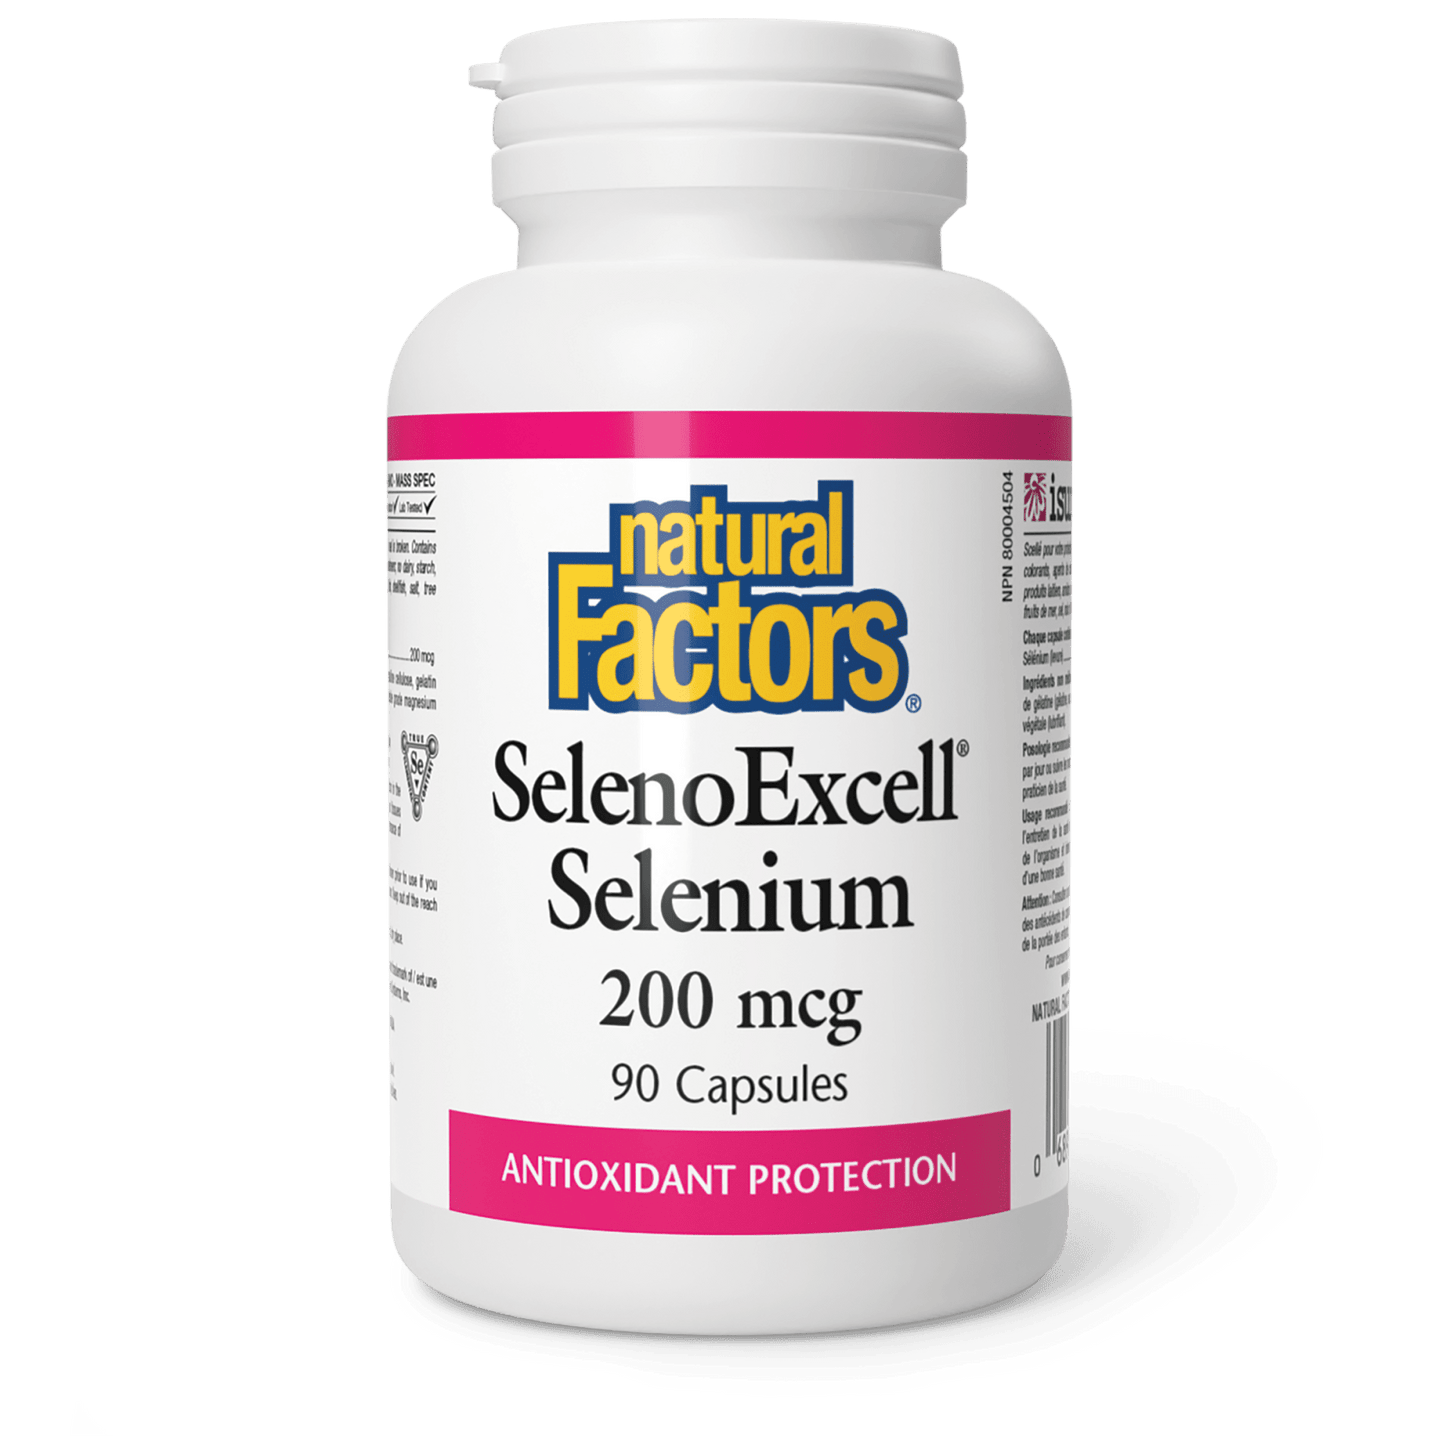 SelenoExcell Selenium 200 mcg, Natural Factors|v|image|1675